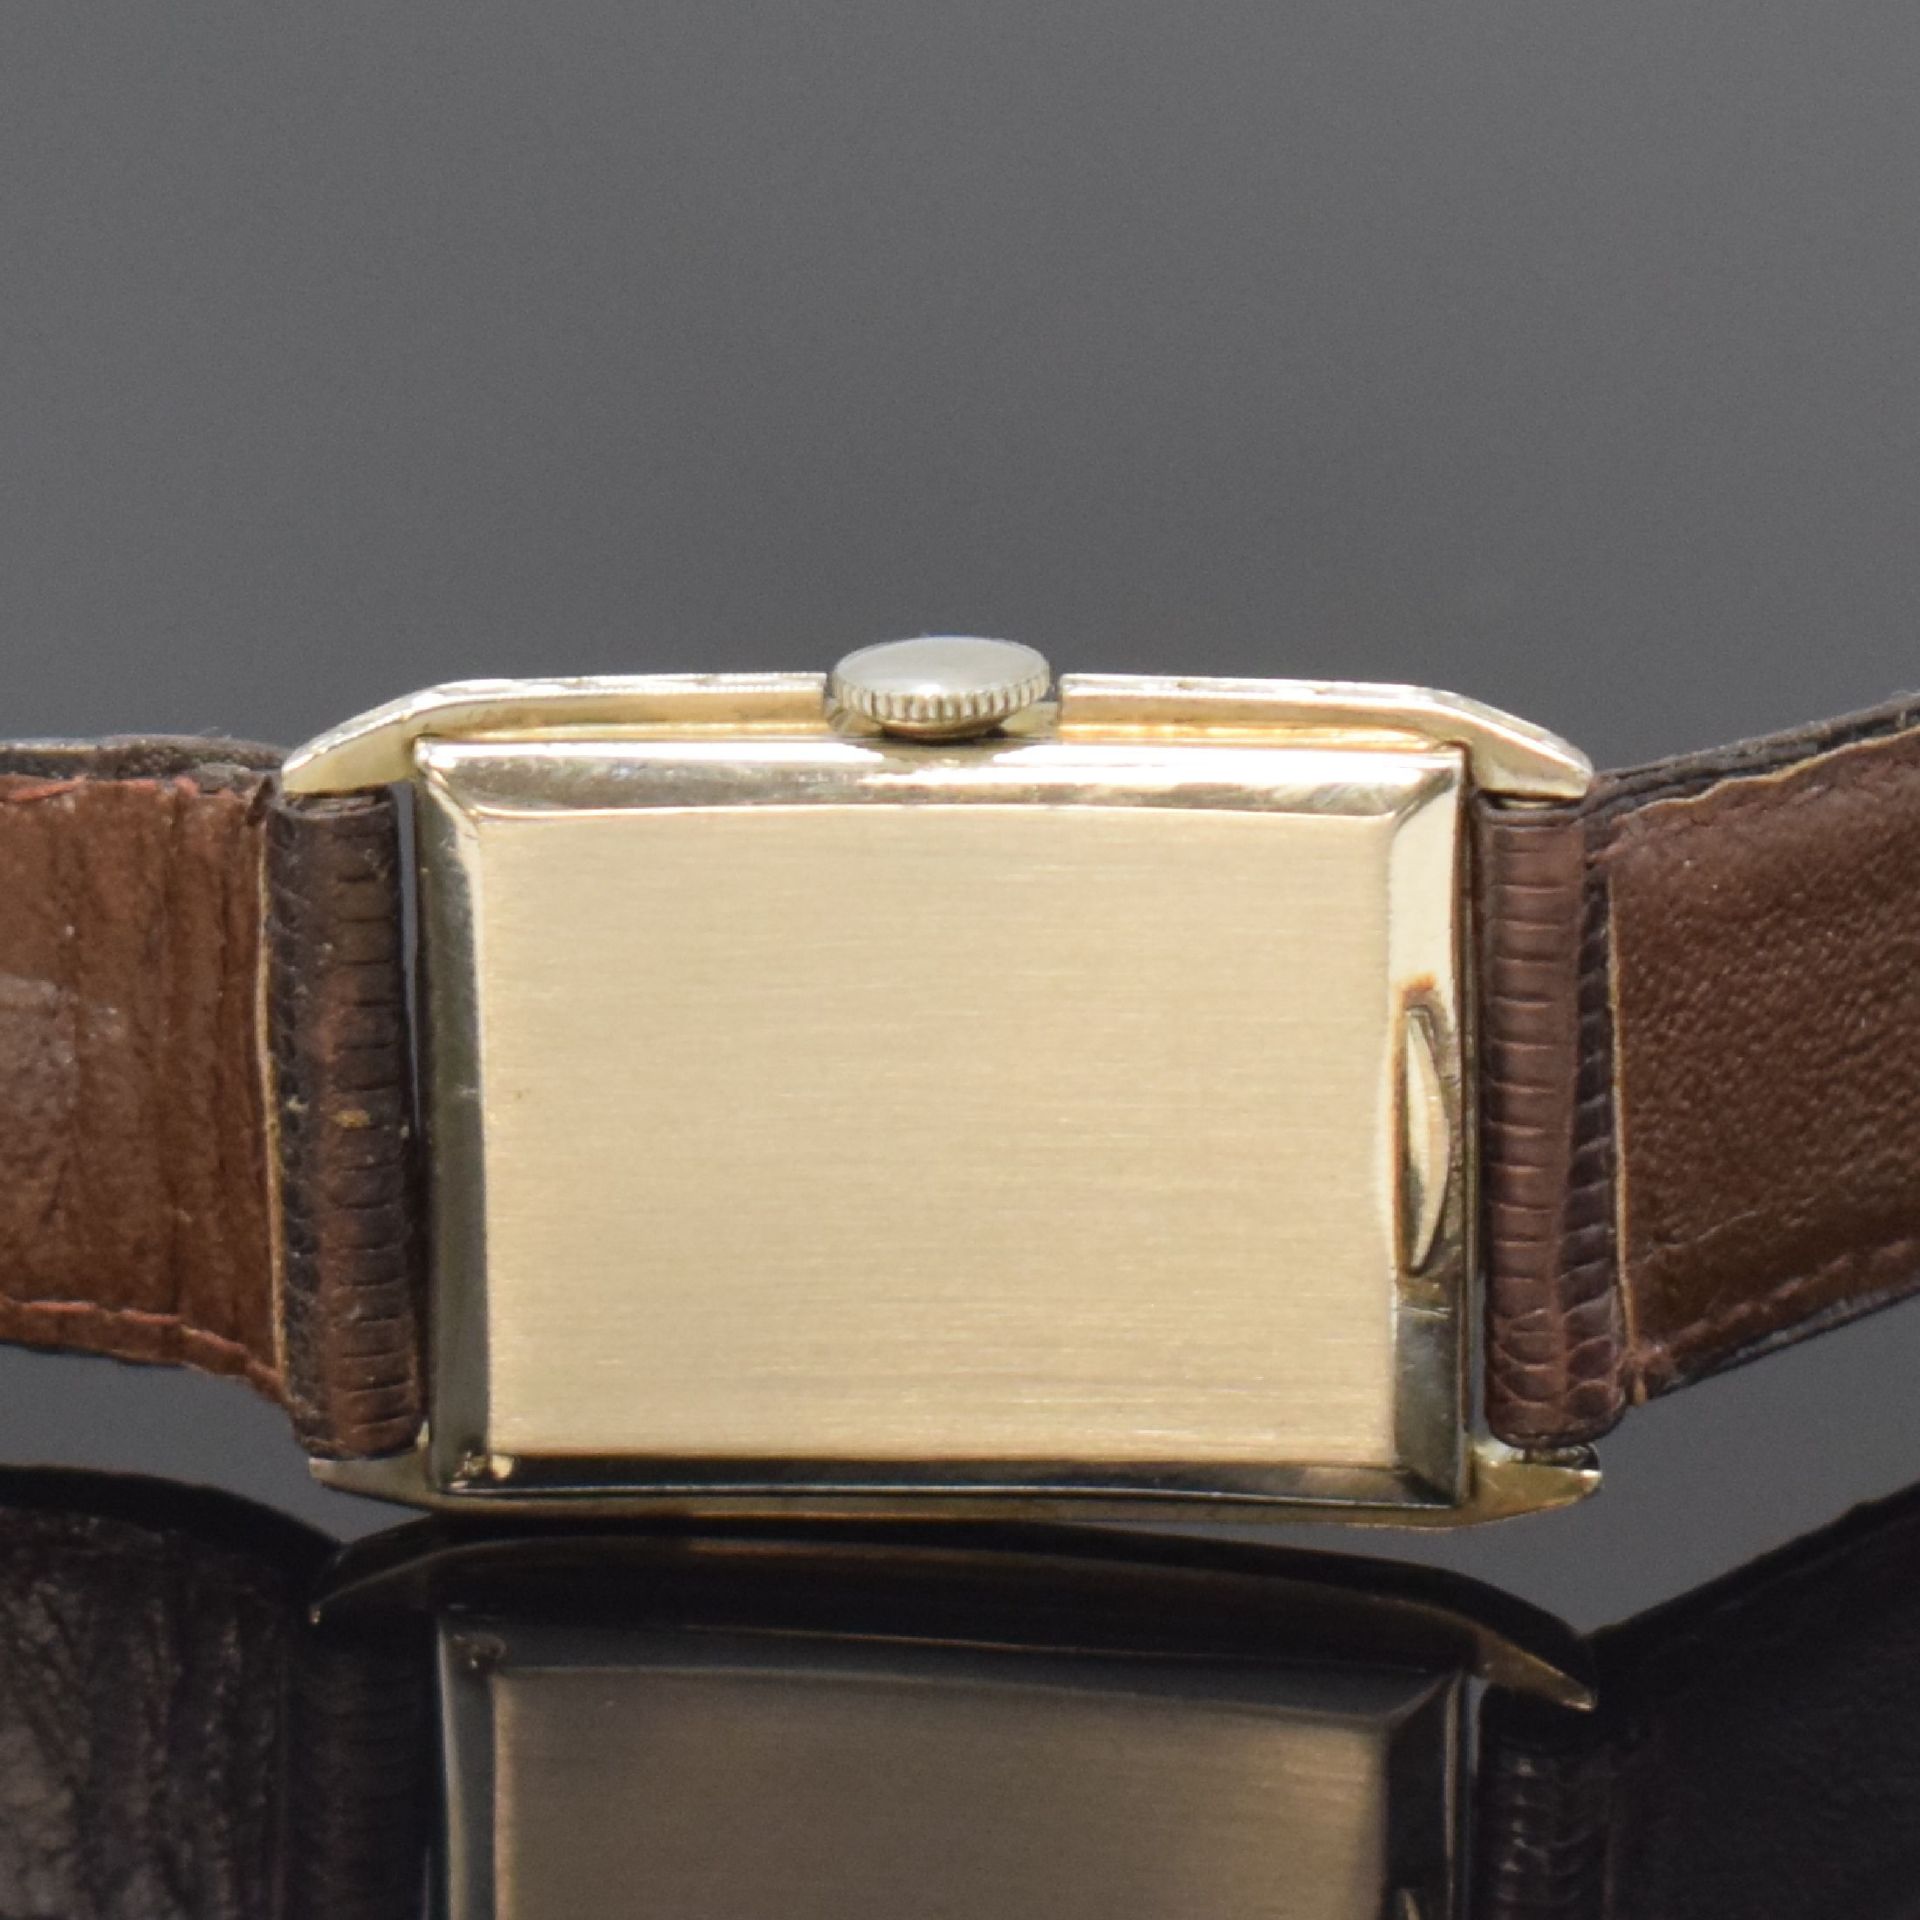 WALTHAM rechteckige Armbanduhr in WG 585/000, USA um - Image 4 of 6